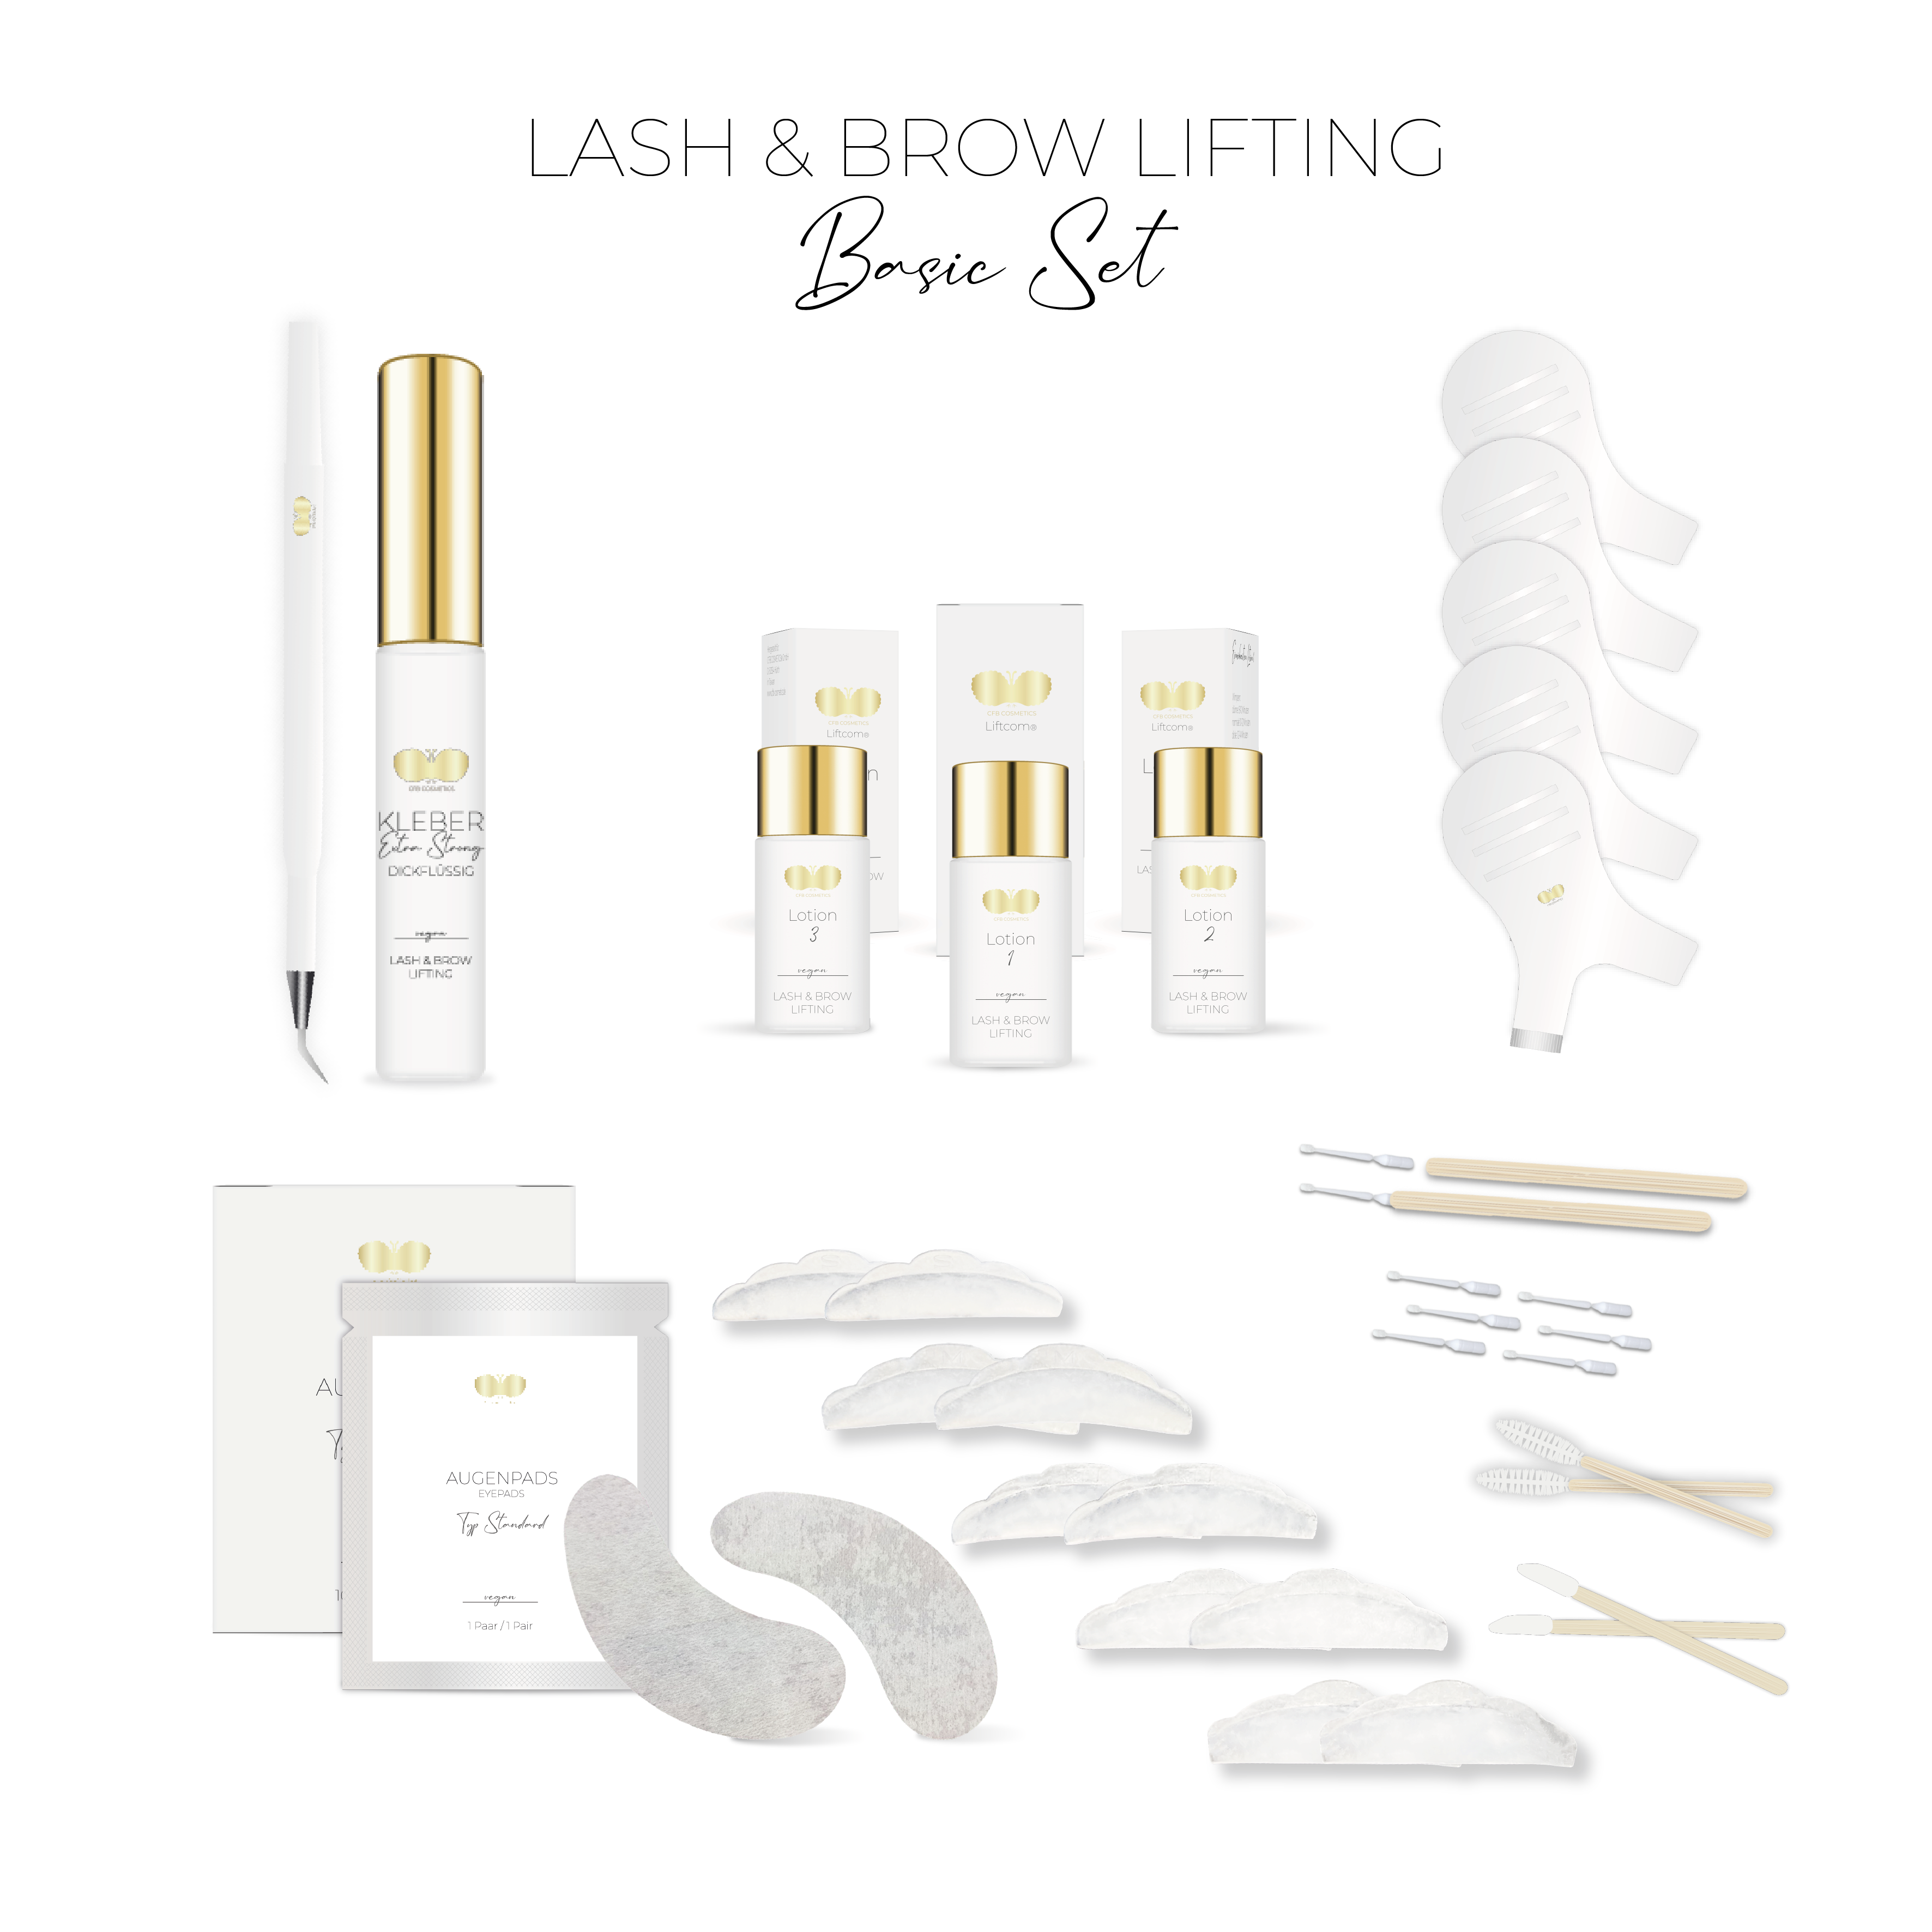 Lash & Brow Lifting | Basic Set